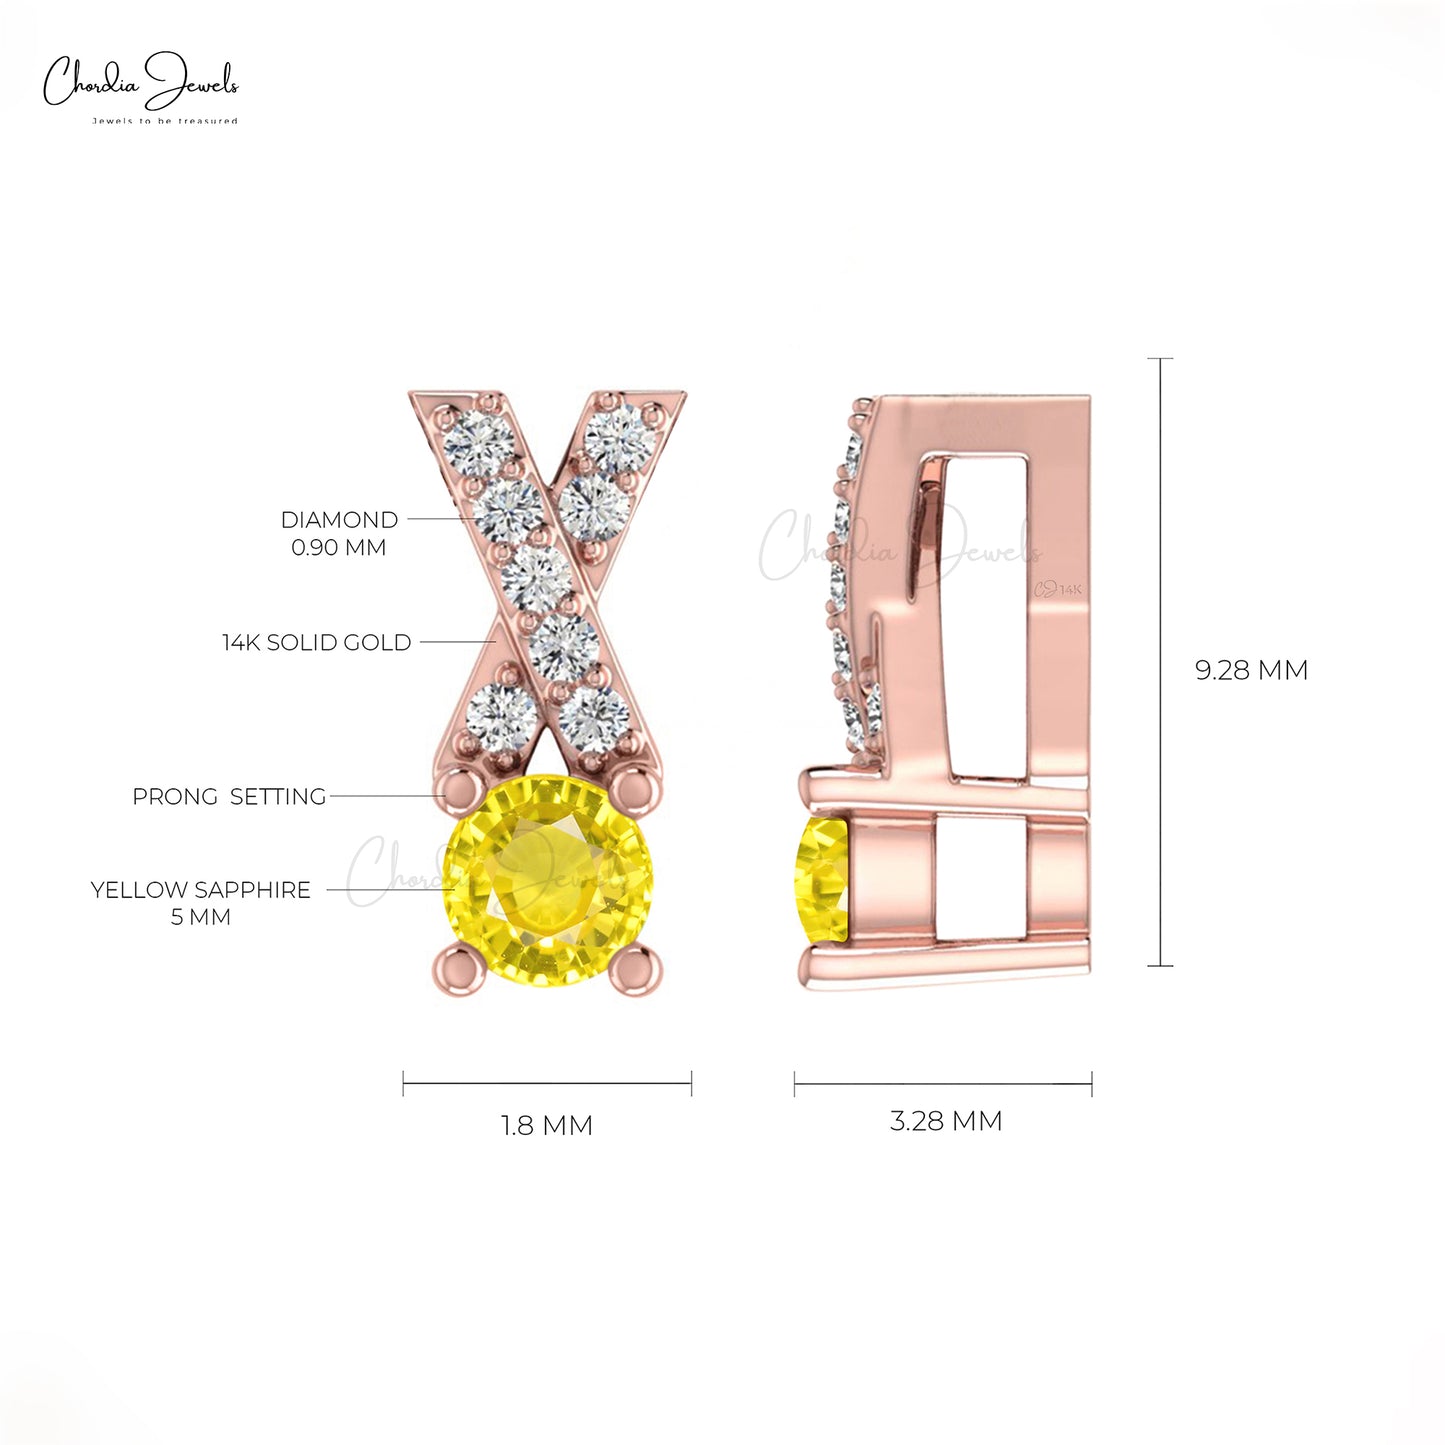 Stunning Yellow Sapphire Pendant In 14k Solid Gold With White Diamond Criss Cross Pendant 5mm Round Cut Handmade Gemstone Pendant For Women's